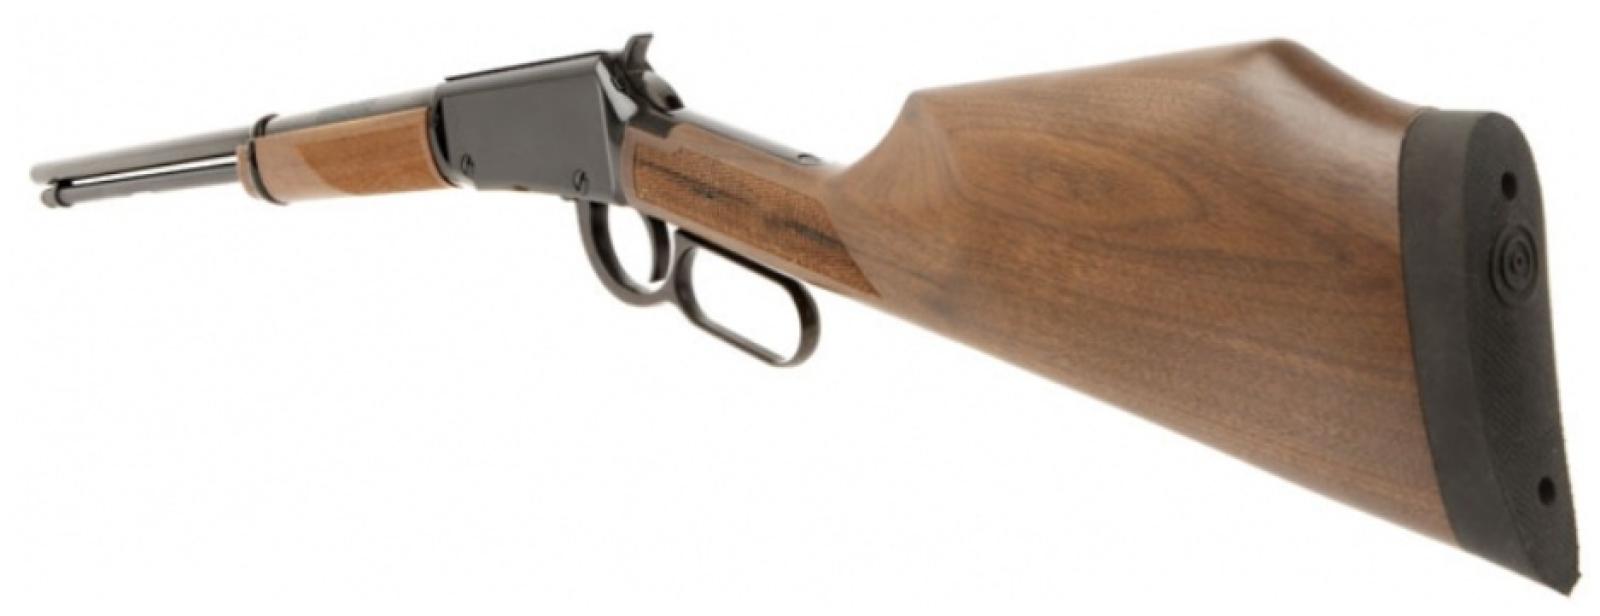 Henry Varmint Express .17 HMR Lever Action Rifle 